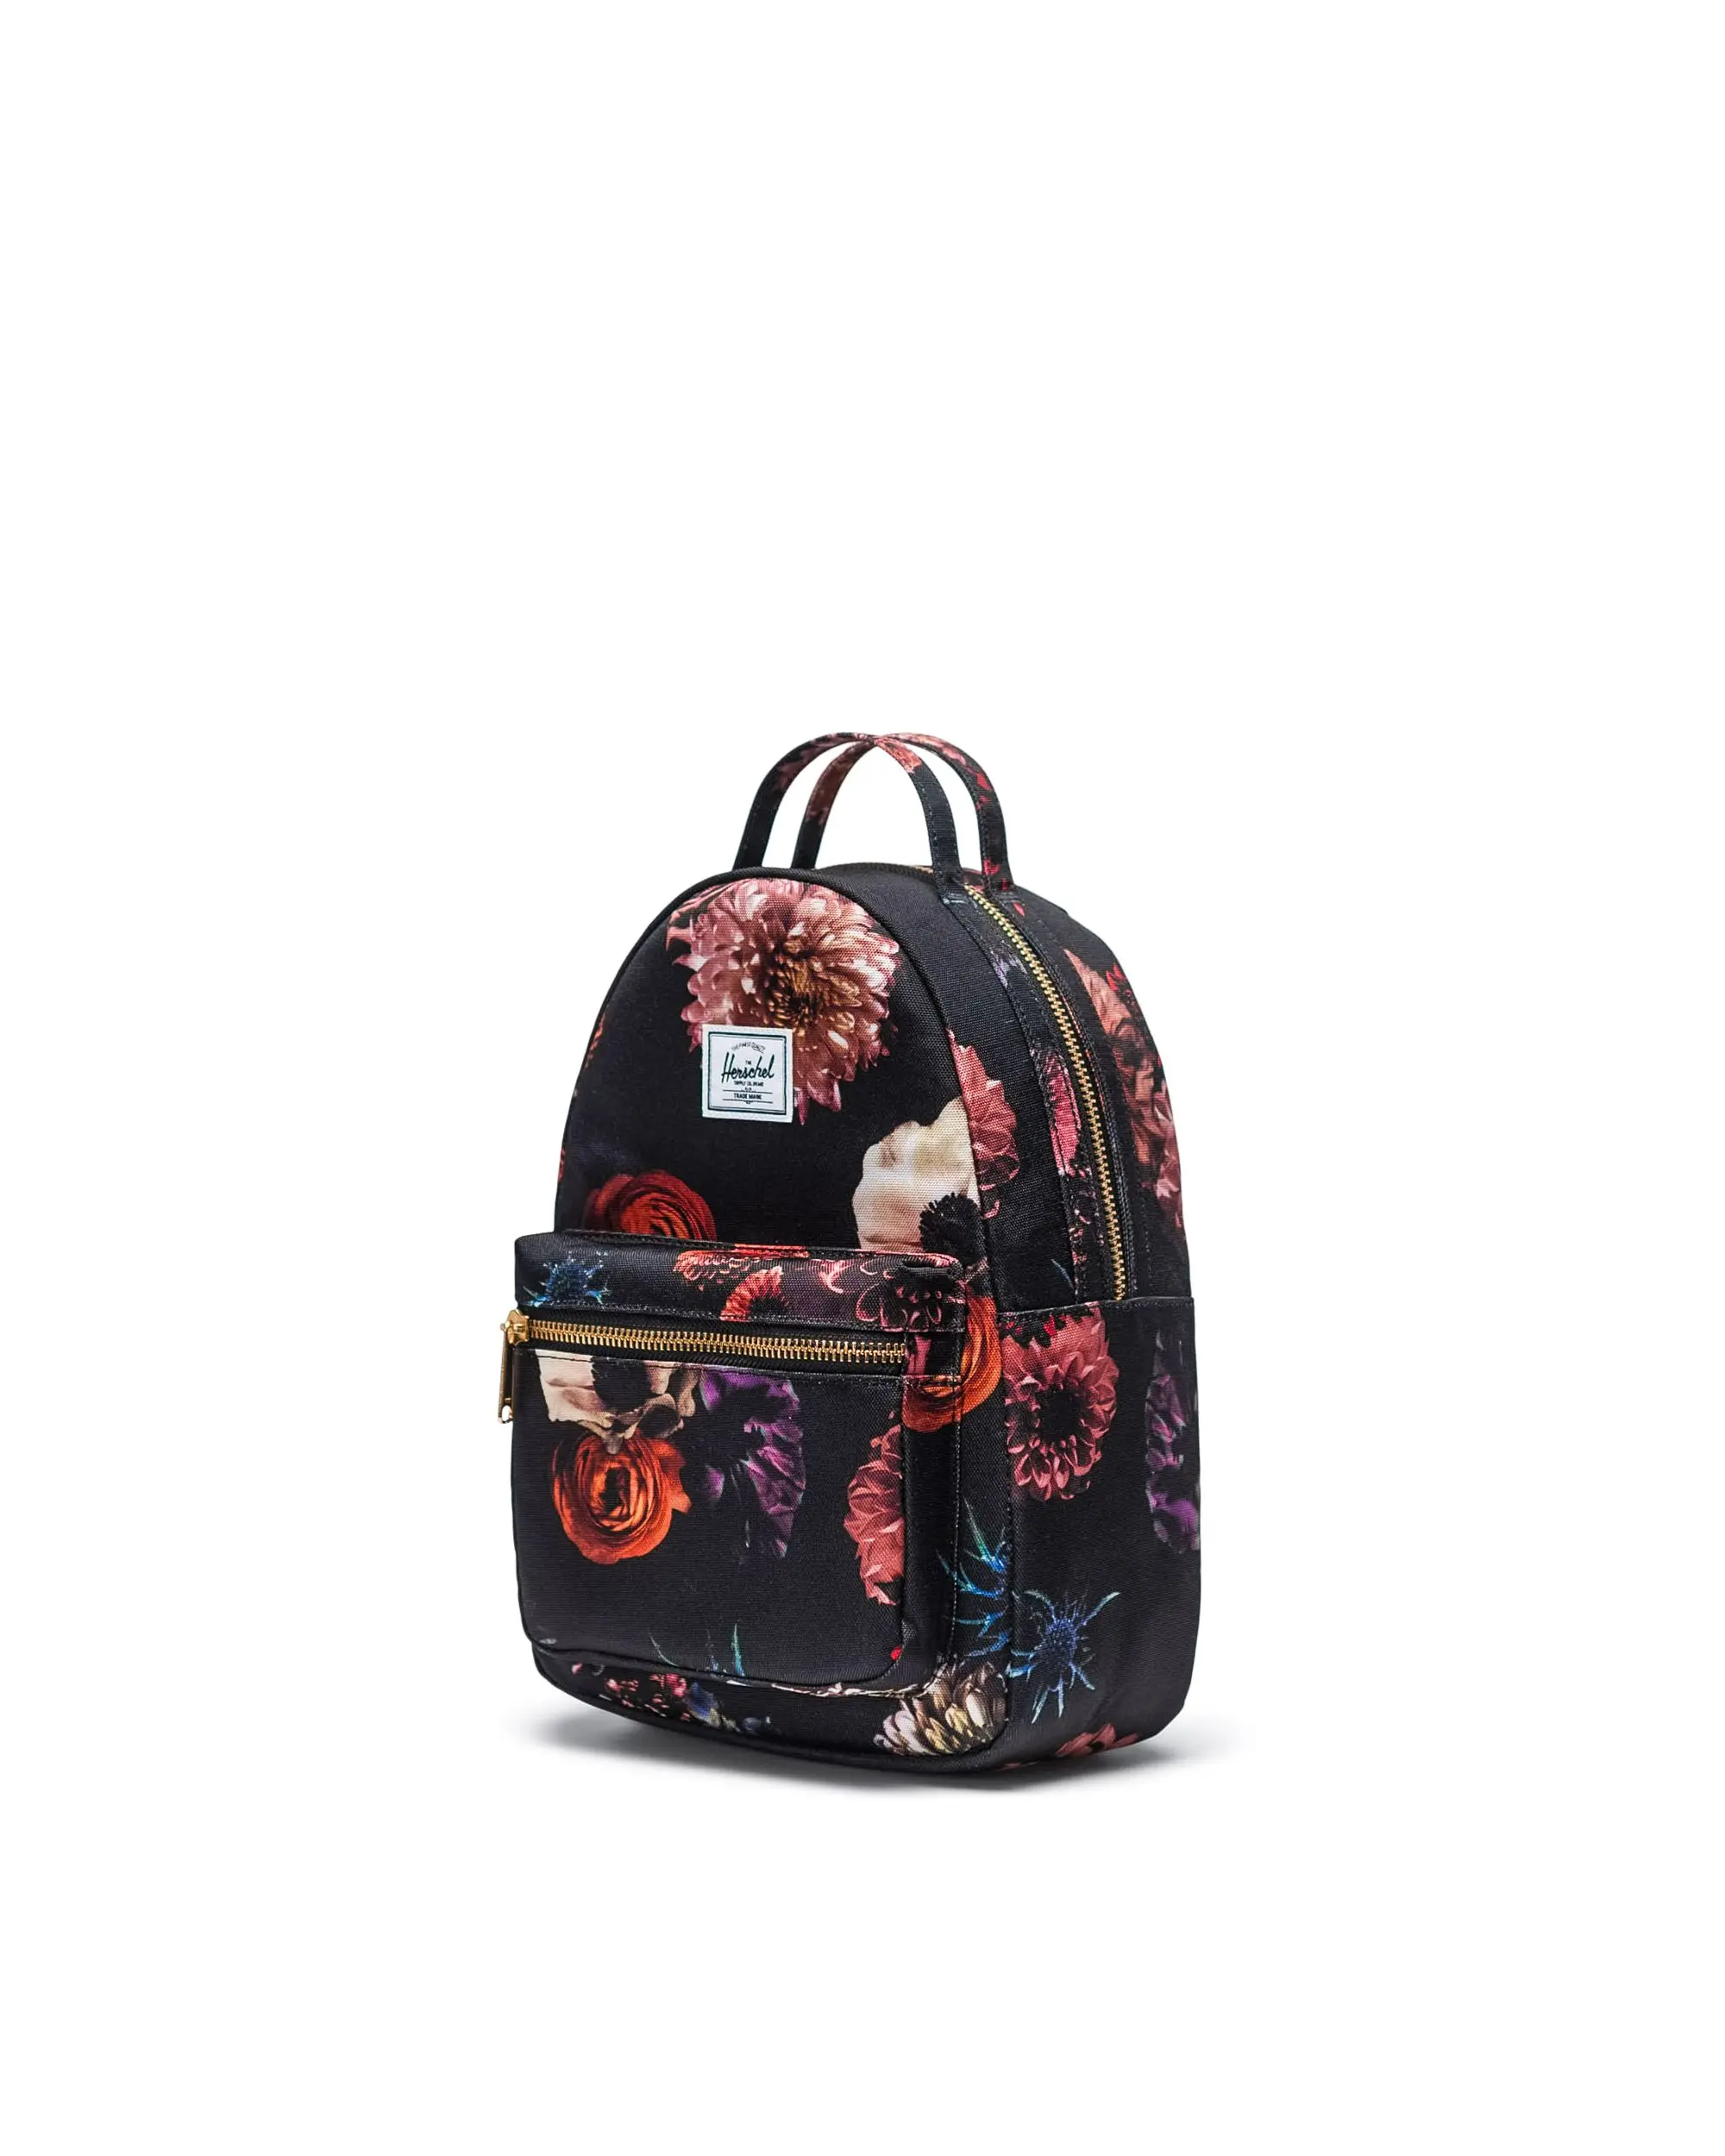 Herschel Nova Backpack, Mini Mineral Rose